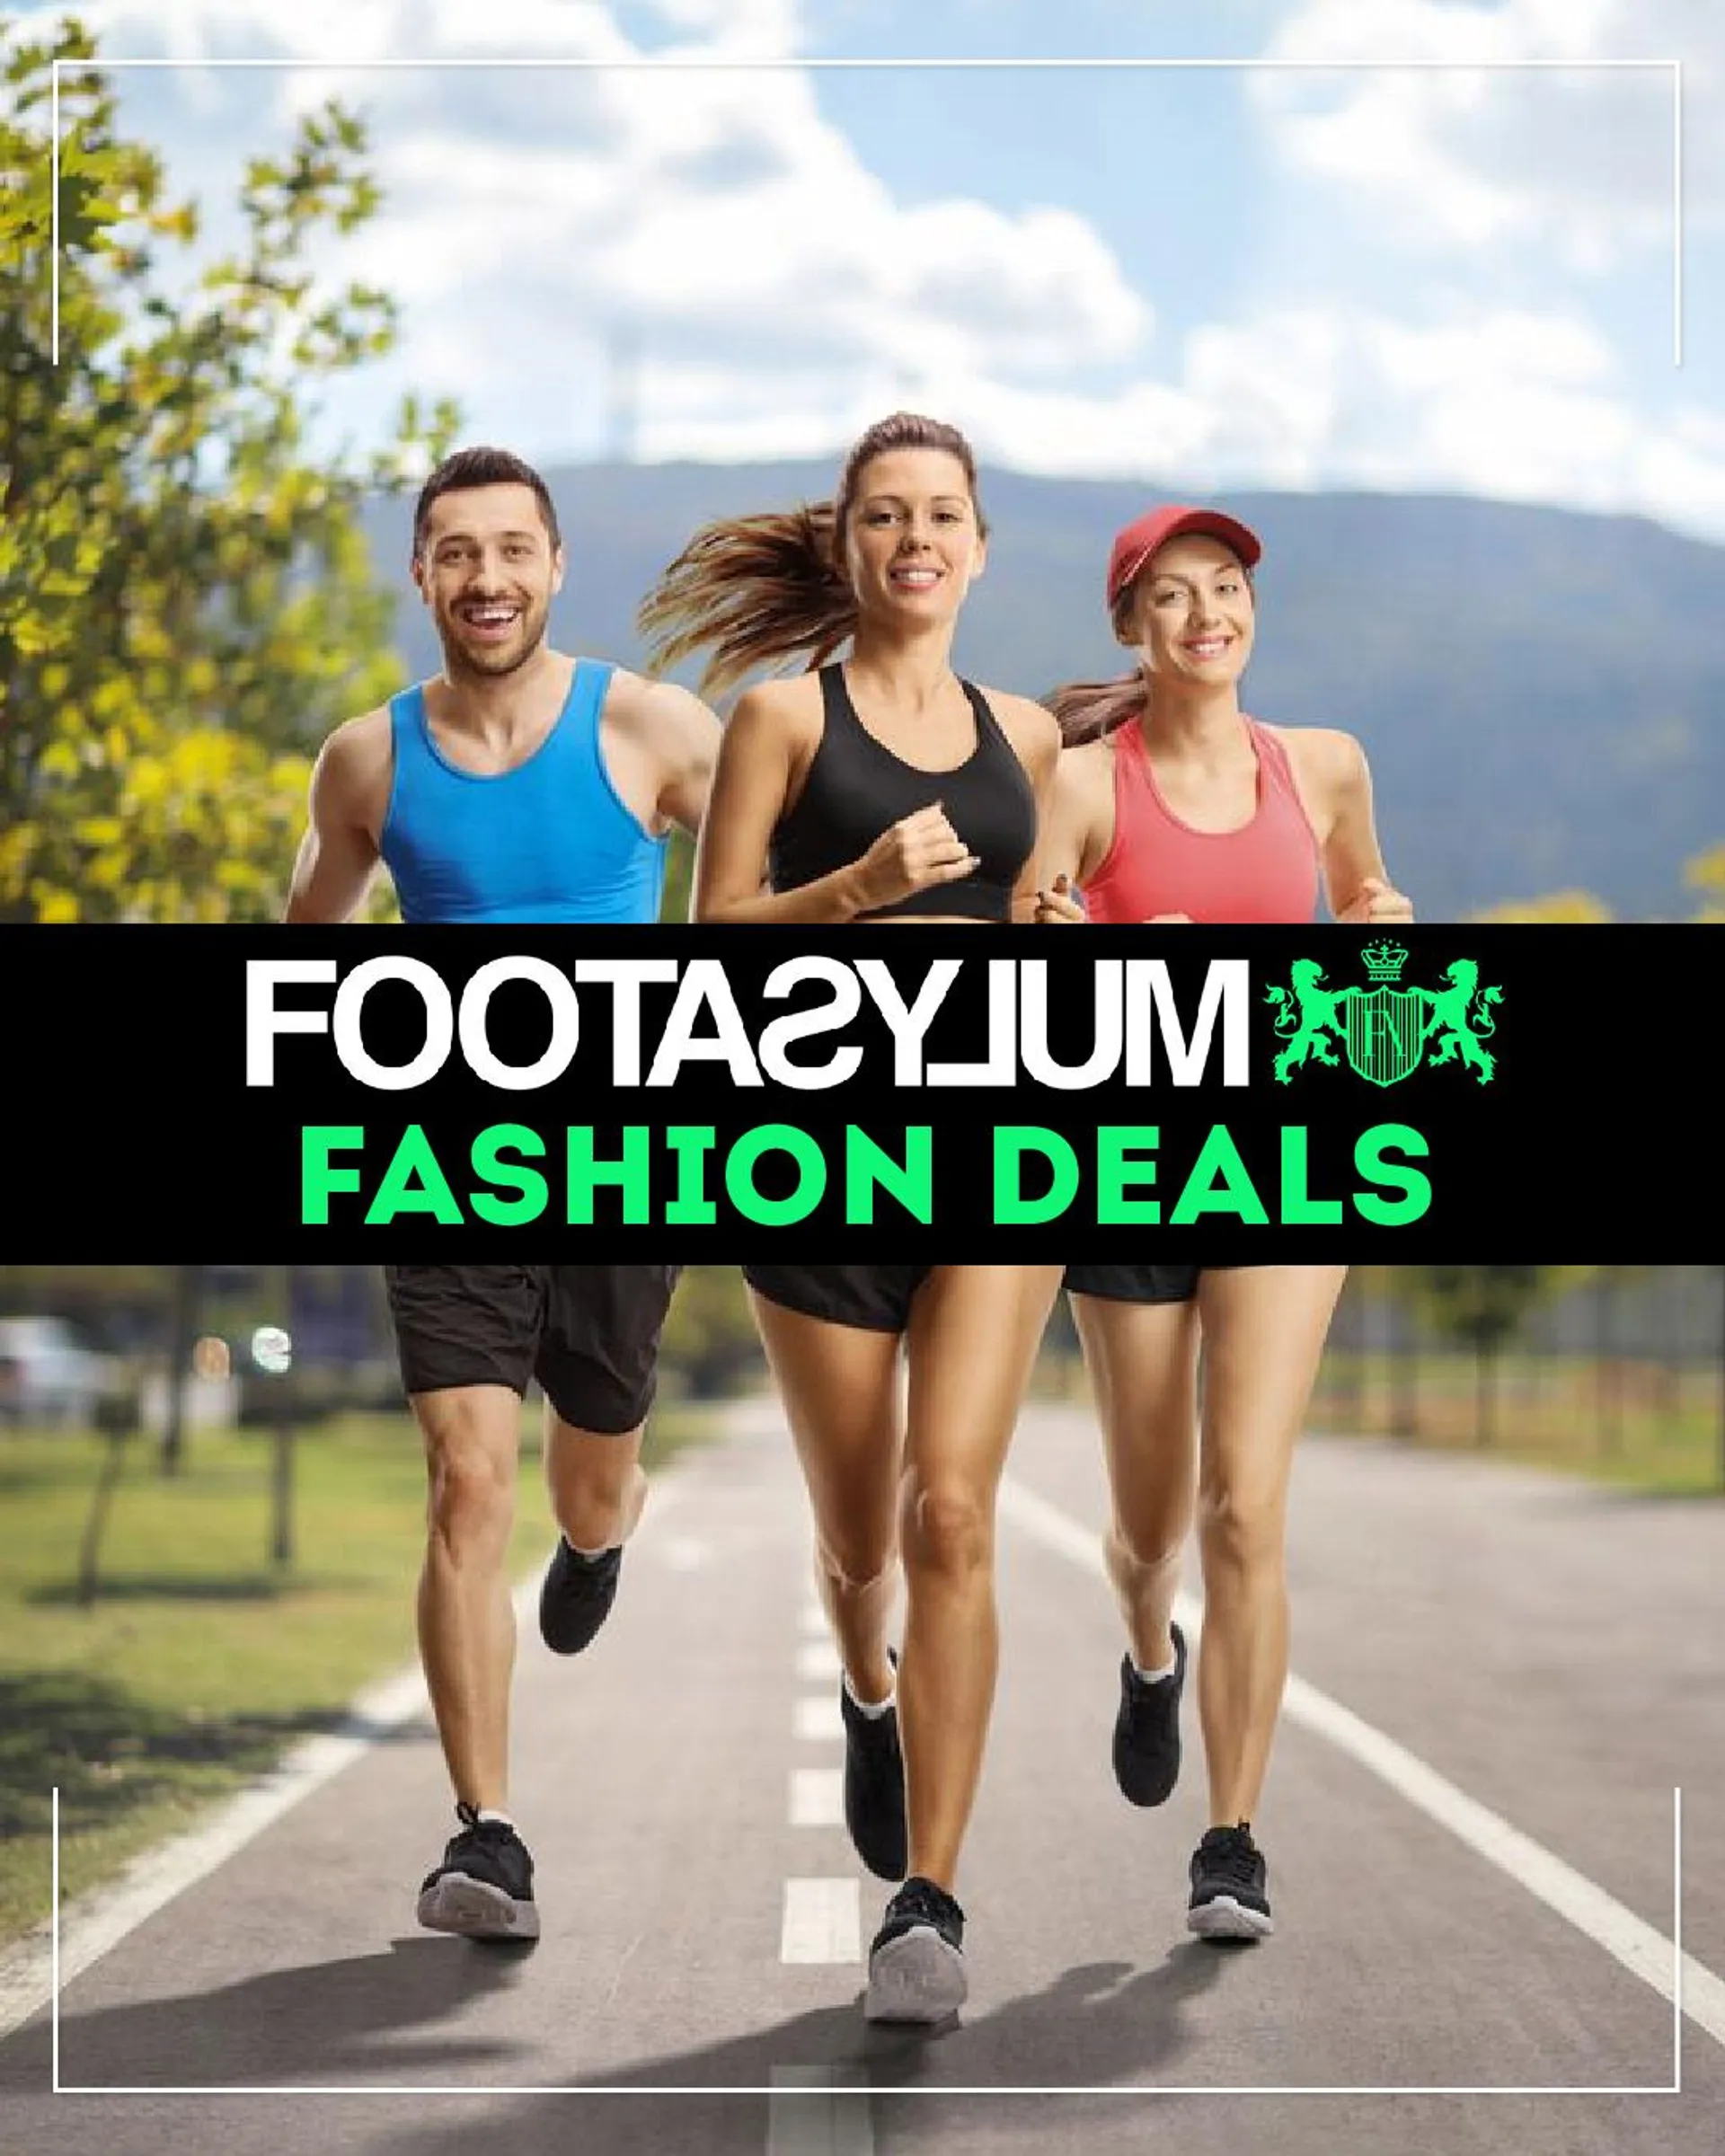 Footasylum - Fashion